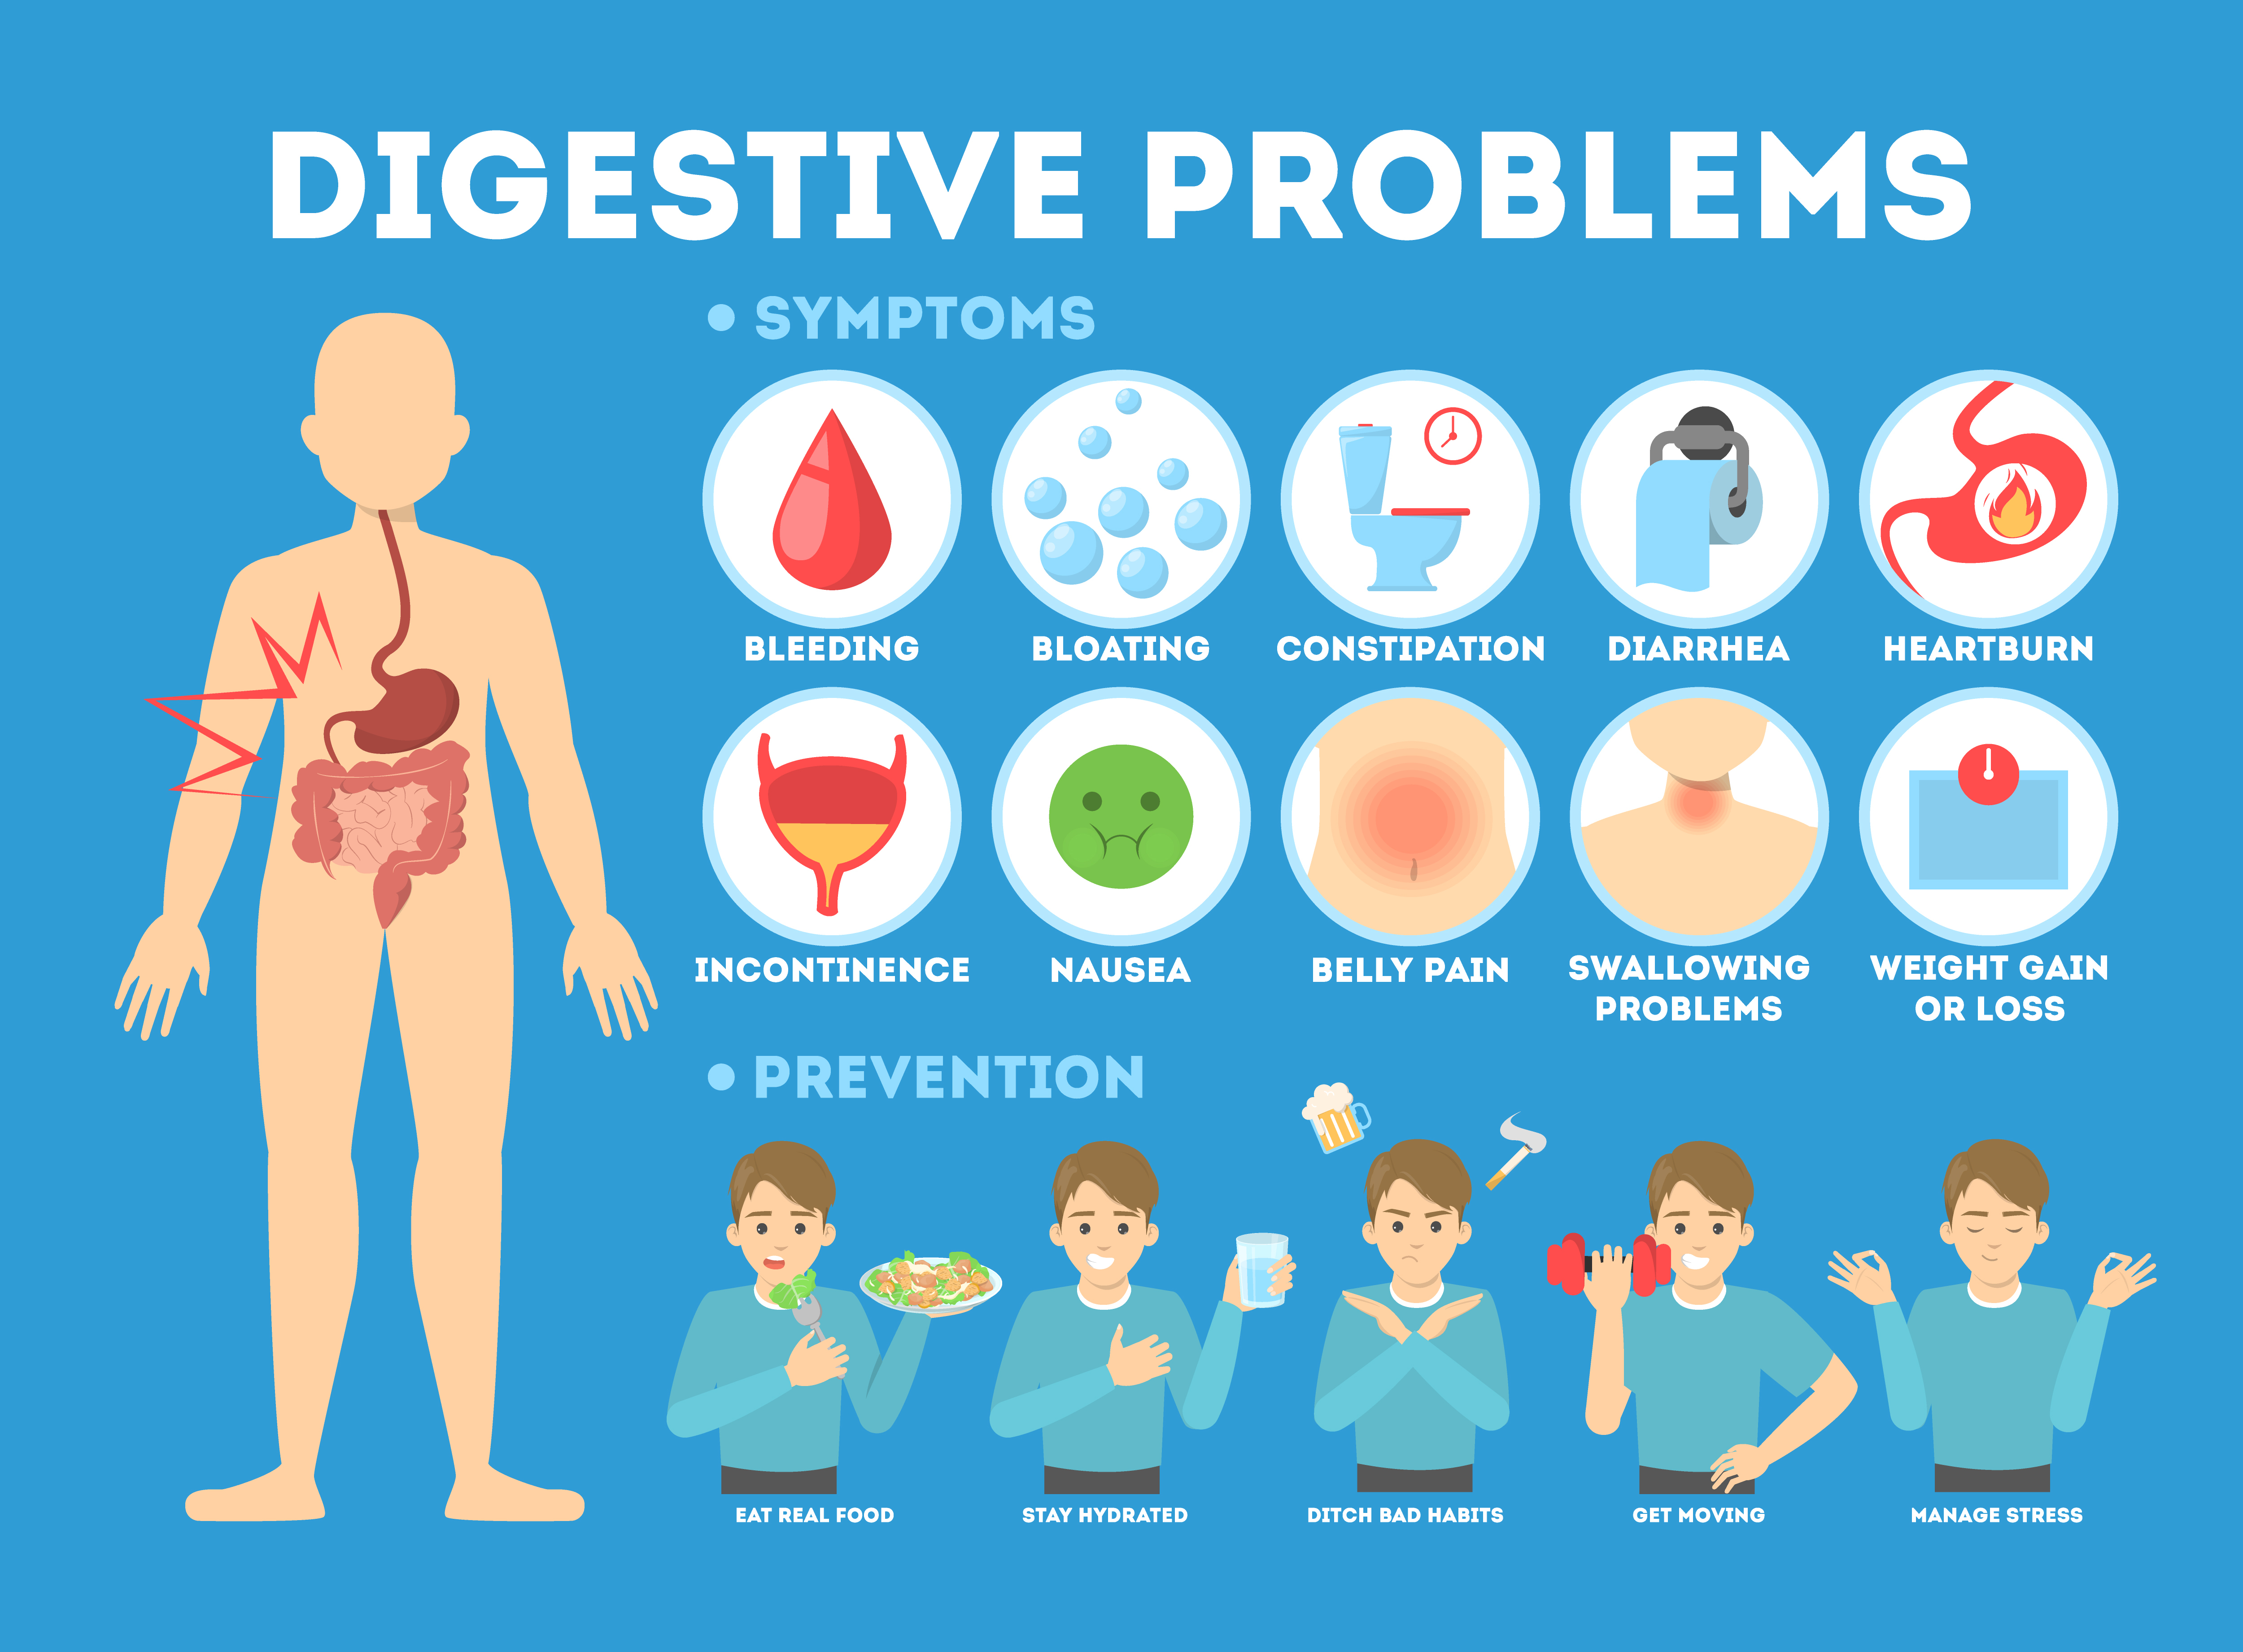 Digestive Problems, Symptoms & Prevention - Treatment @ MDIMC